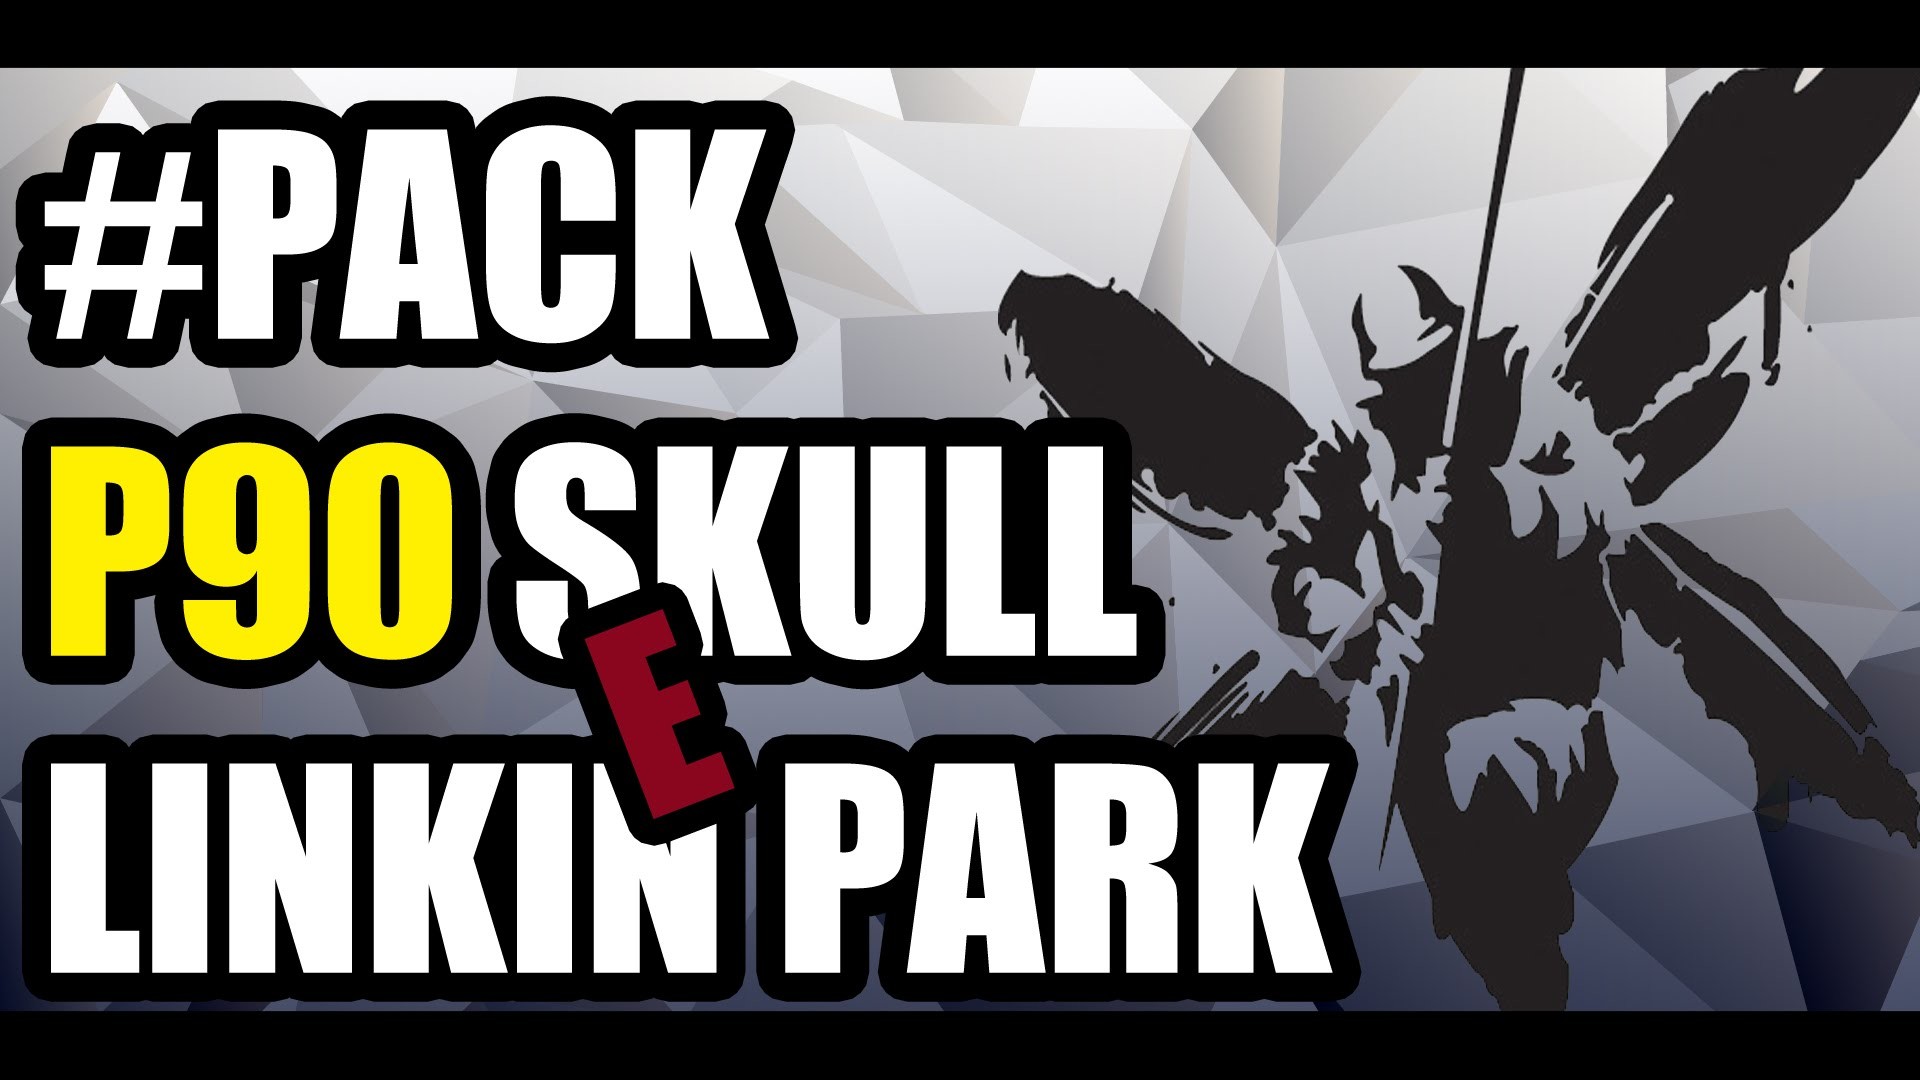 1920x1080 Point Blank - #PACK P90 Skull & Linkin Park [Exclusivo]